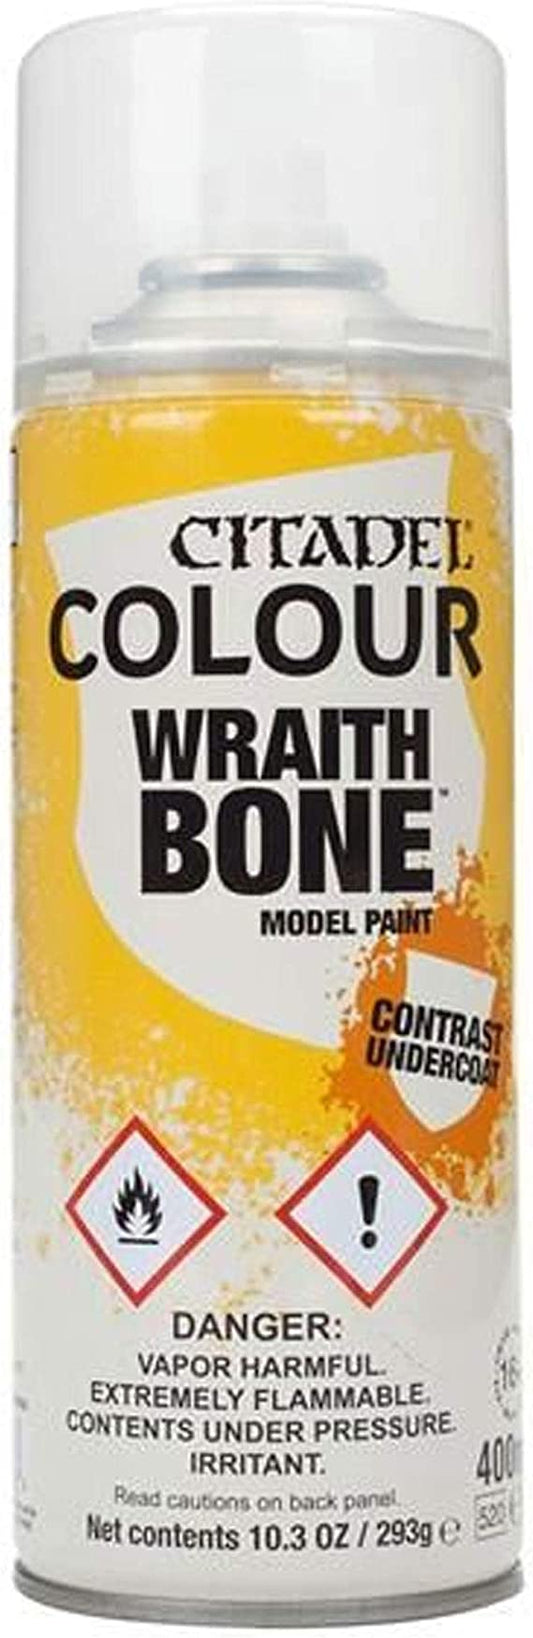 Citadel Wraith Bone Model Spray Paint